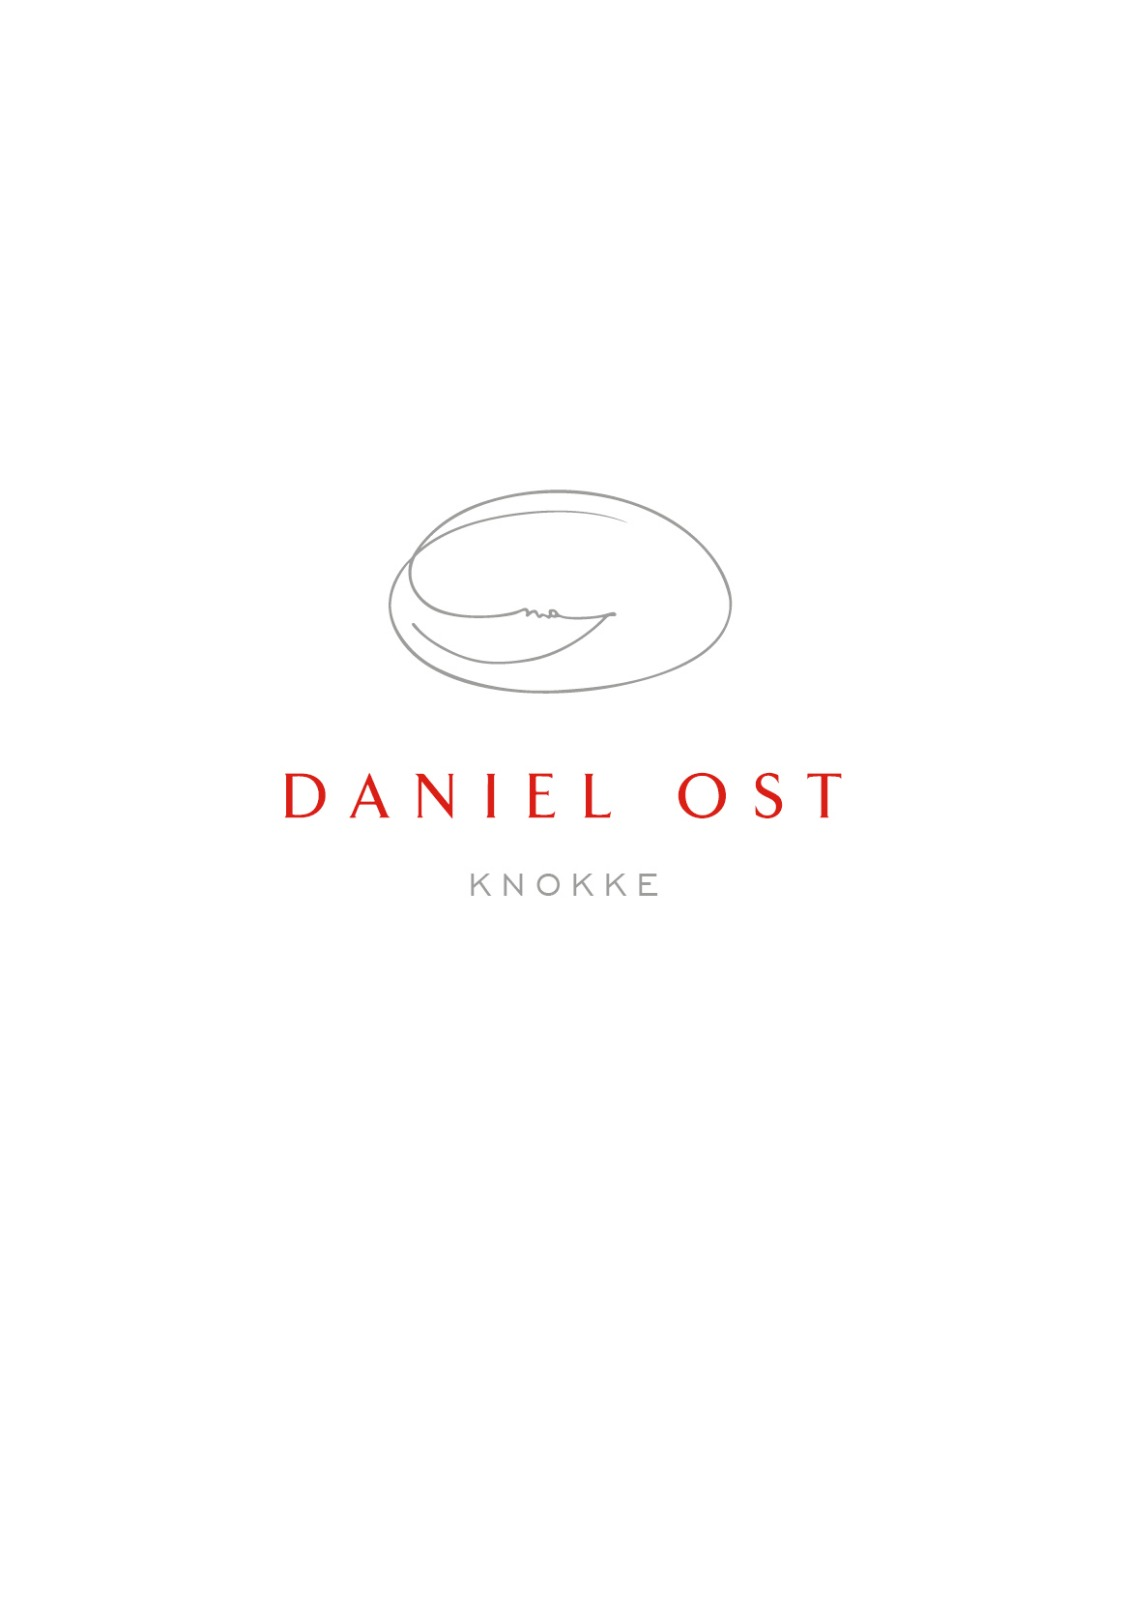 Persbericht: Bloemenhuis Daniel Ost vindt vaste stek in Knokke-Heist